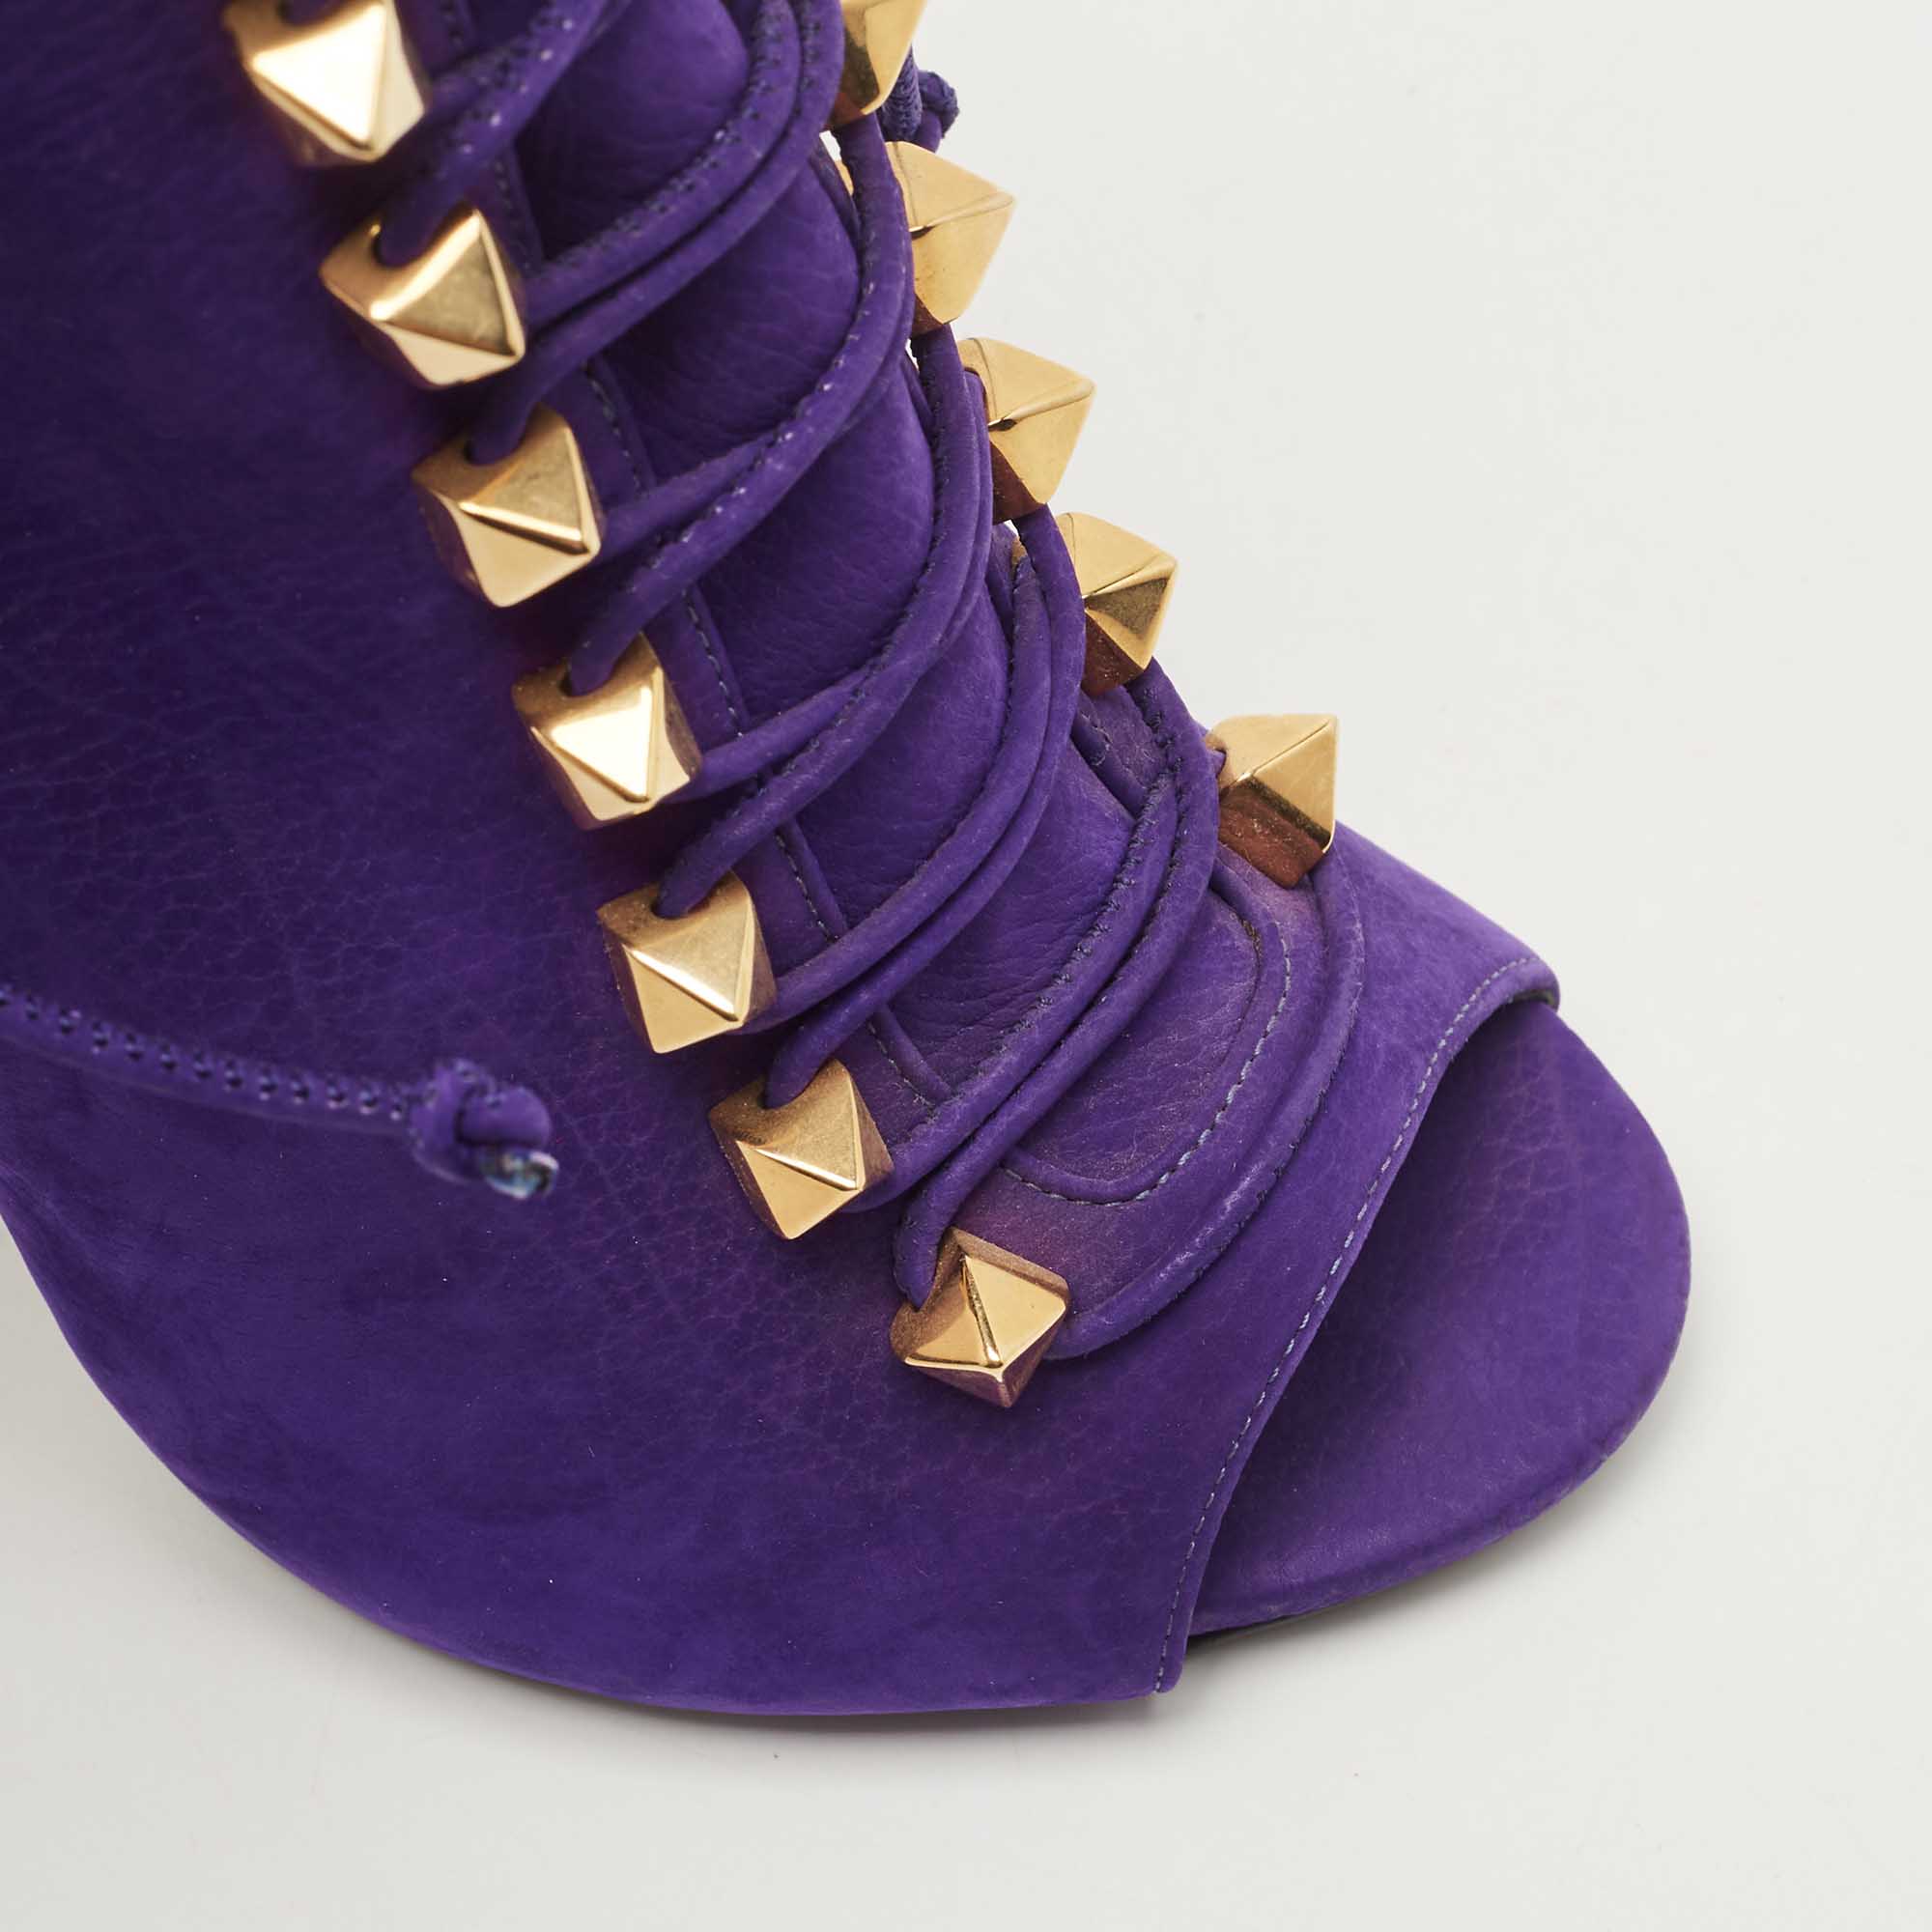 Giuseppe Zanotti Purple Nubuck Leather Studded Lace Up Ankle Booties Size 38